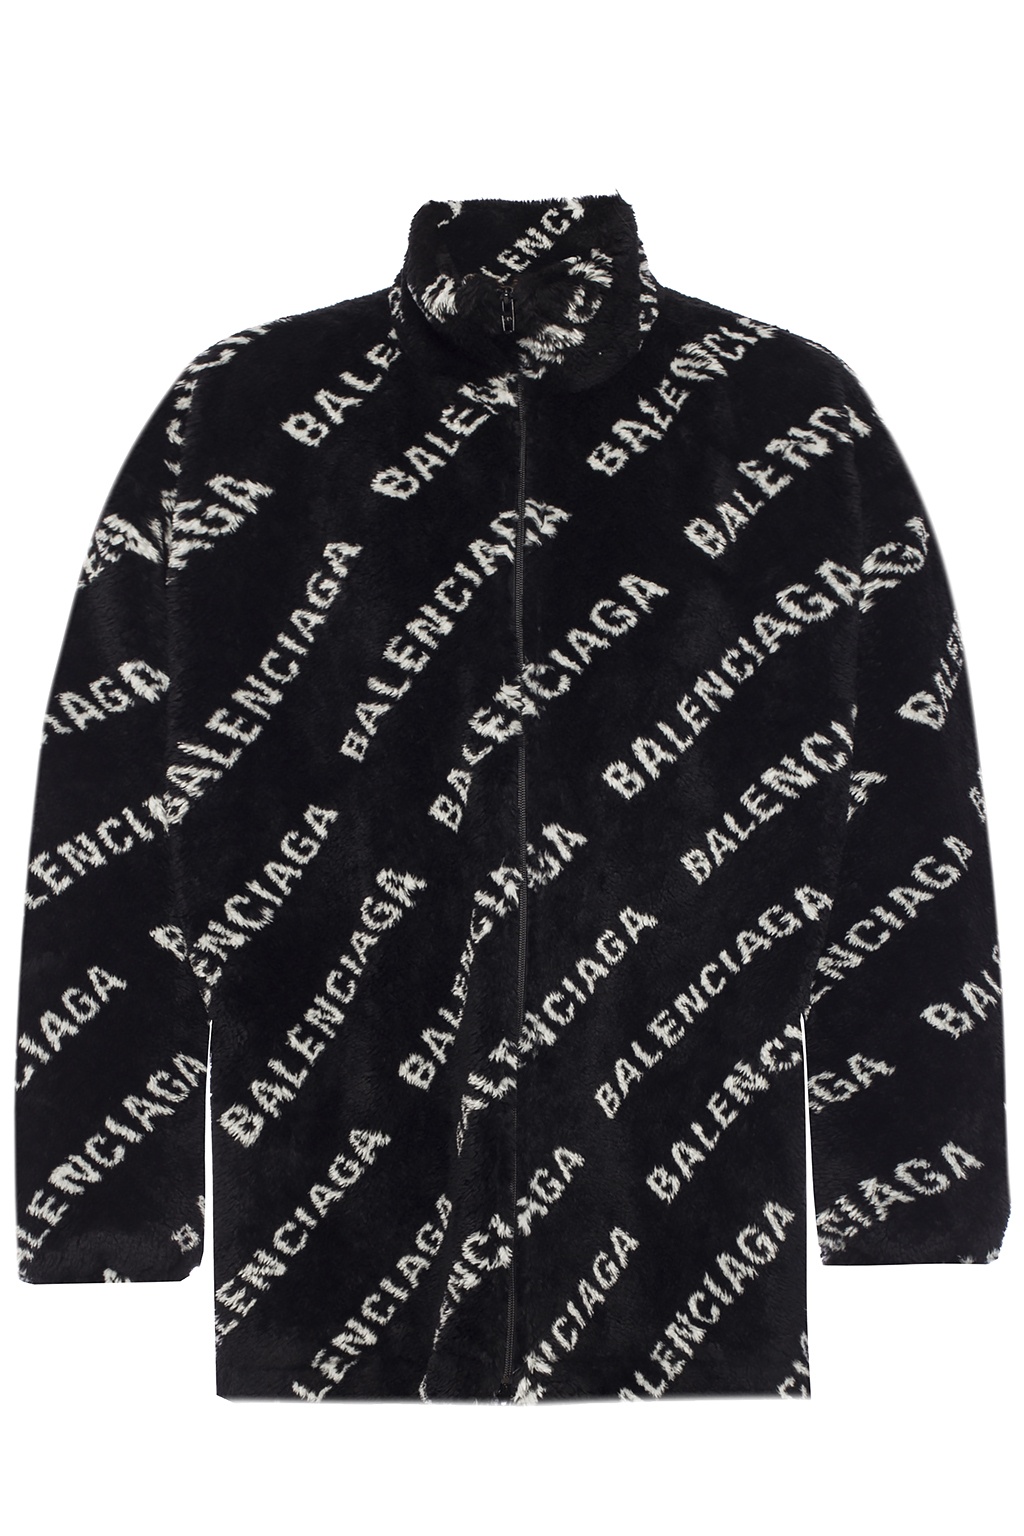 Balenciaga Crop Faux Fur Jacket on SALE  Saks OFF 5TH